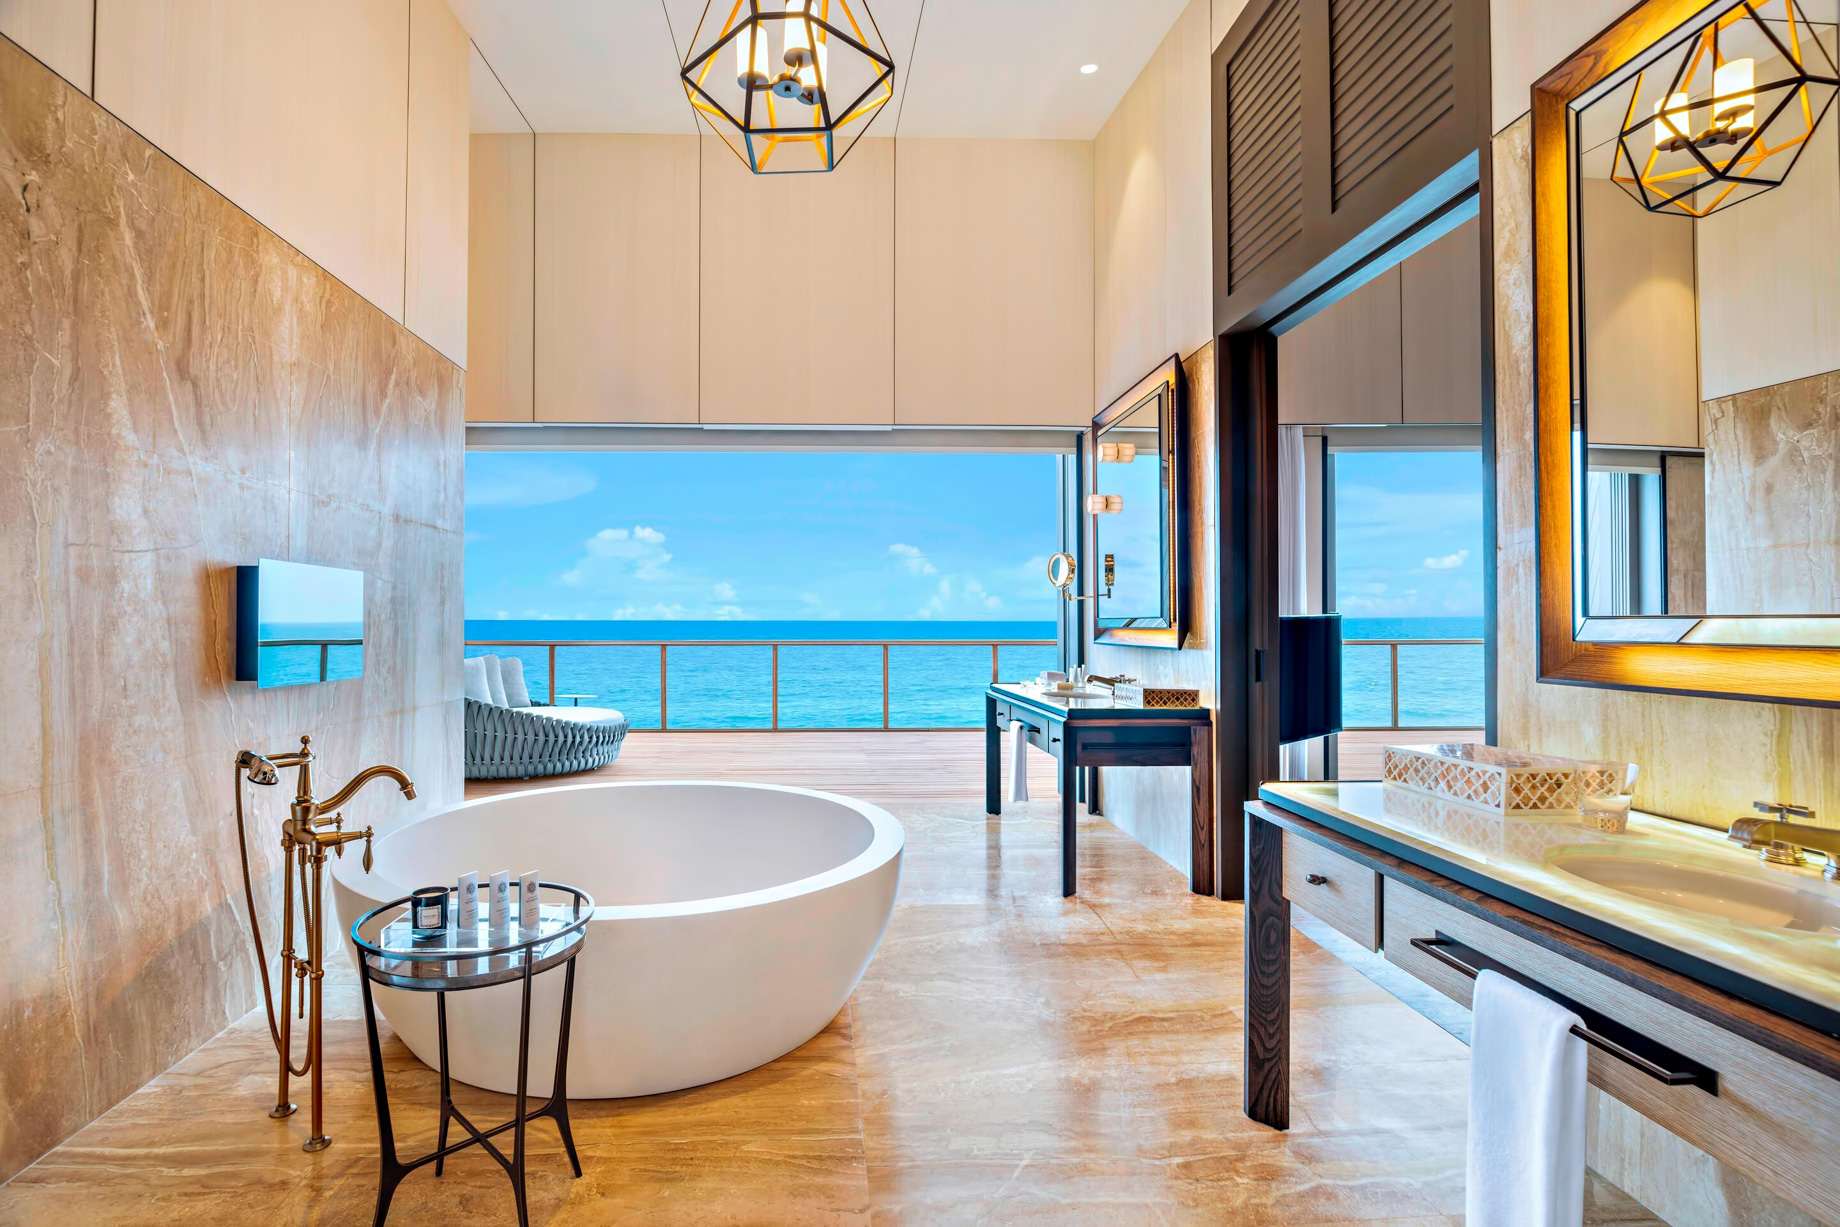 The St. Regis Maldives Vommuli Resort - Dhaalu Atoll, Maldives - John Jacob Astor Estate Bathroom